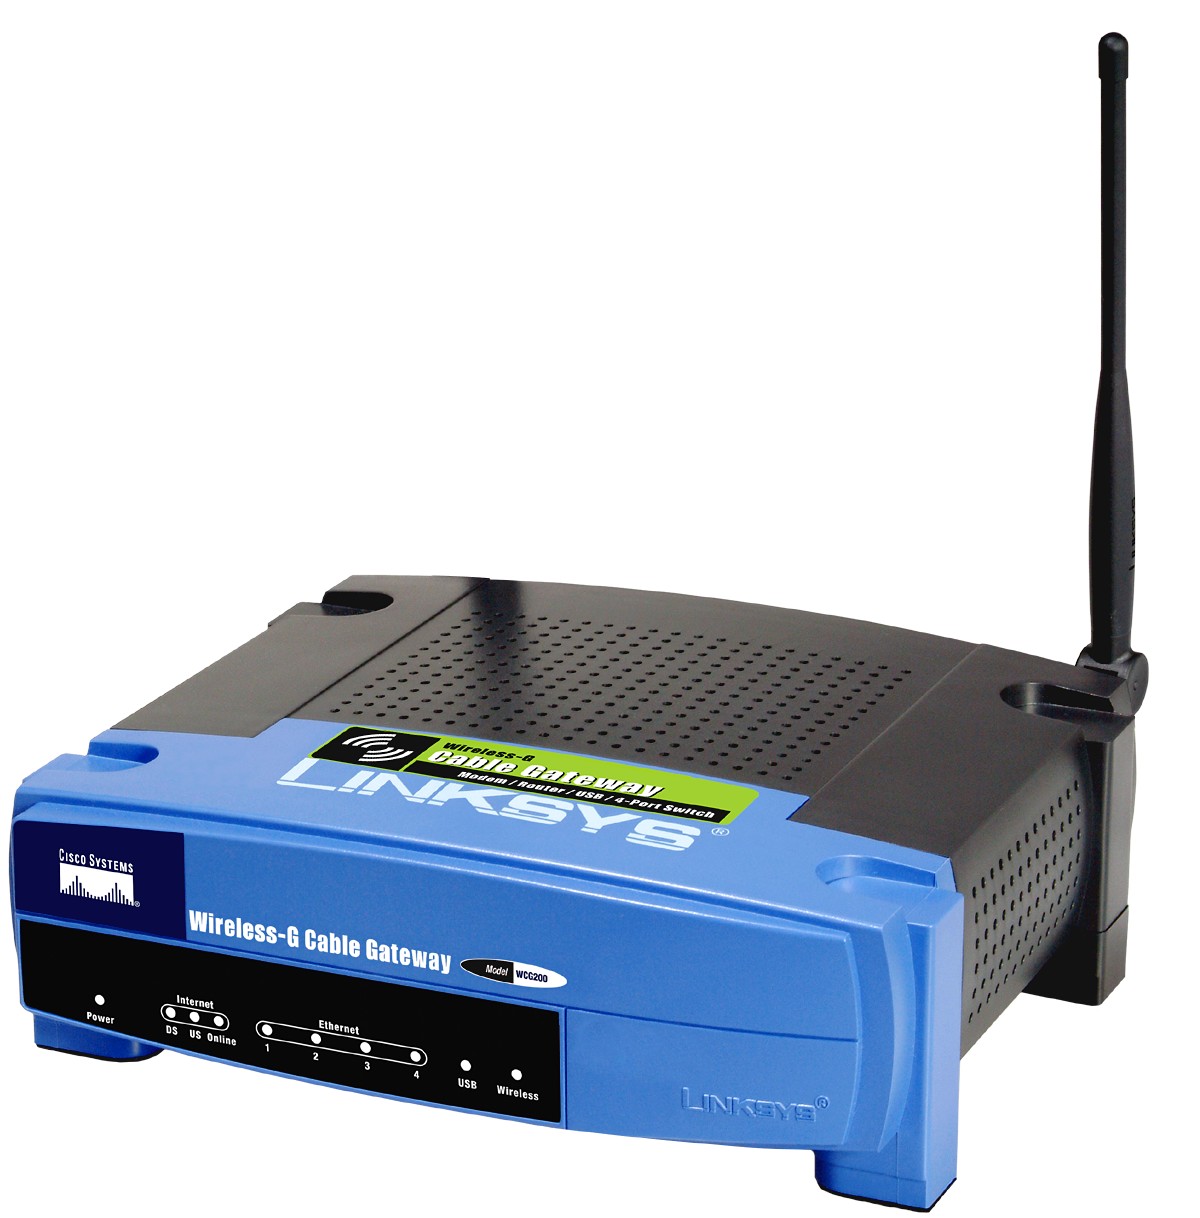 WCG200 Linksys Wireless 802.11G 4-Port 10/100Base-TX RJ-45 Cable Gateway Fast Ethernet Switch (Refurbished)